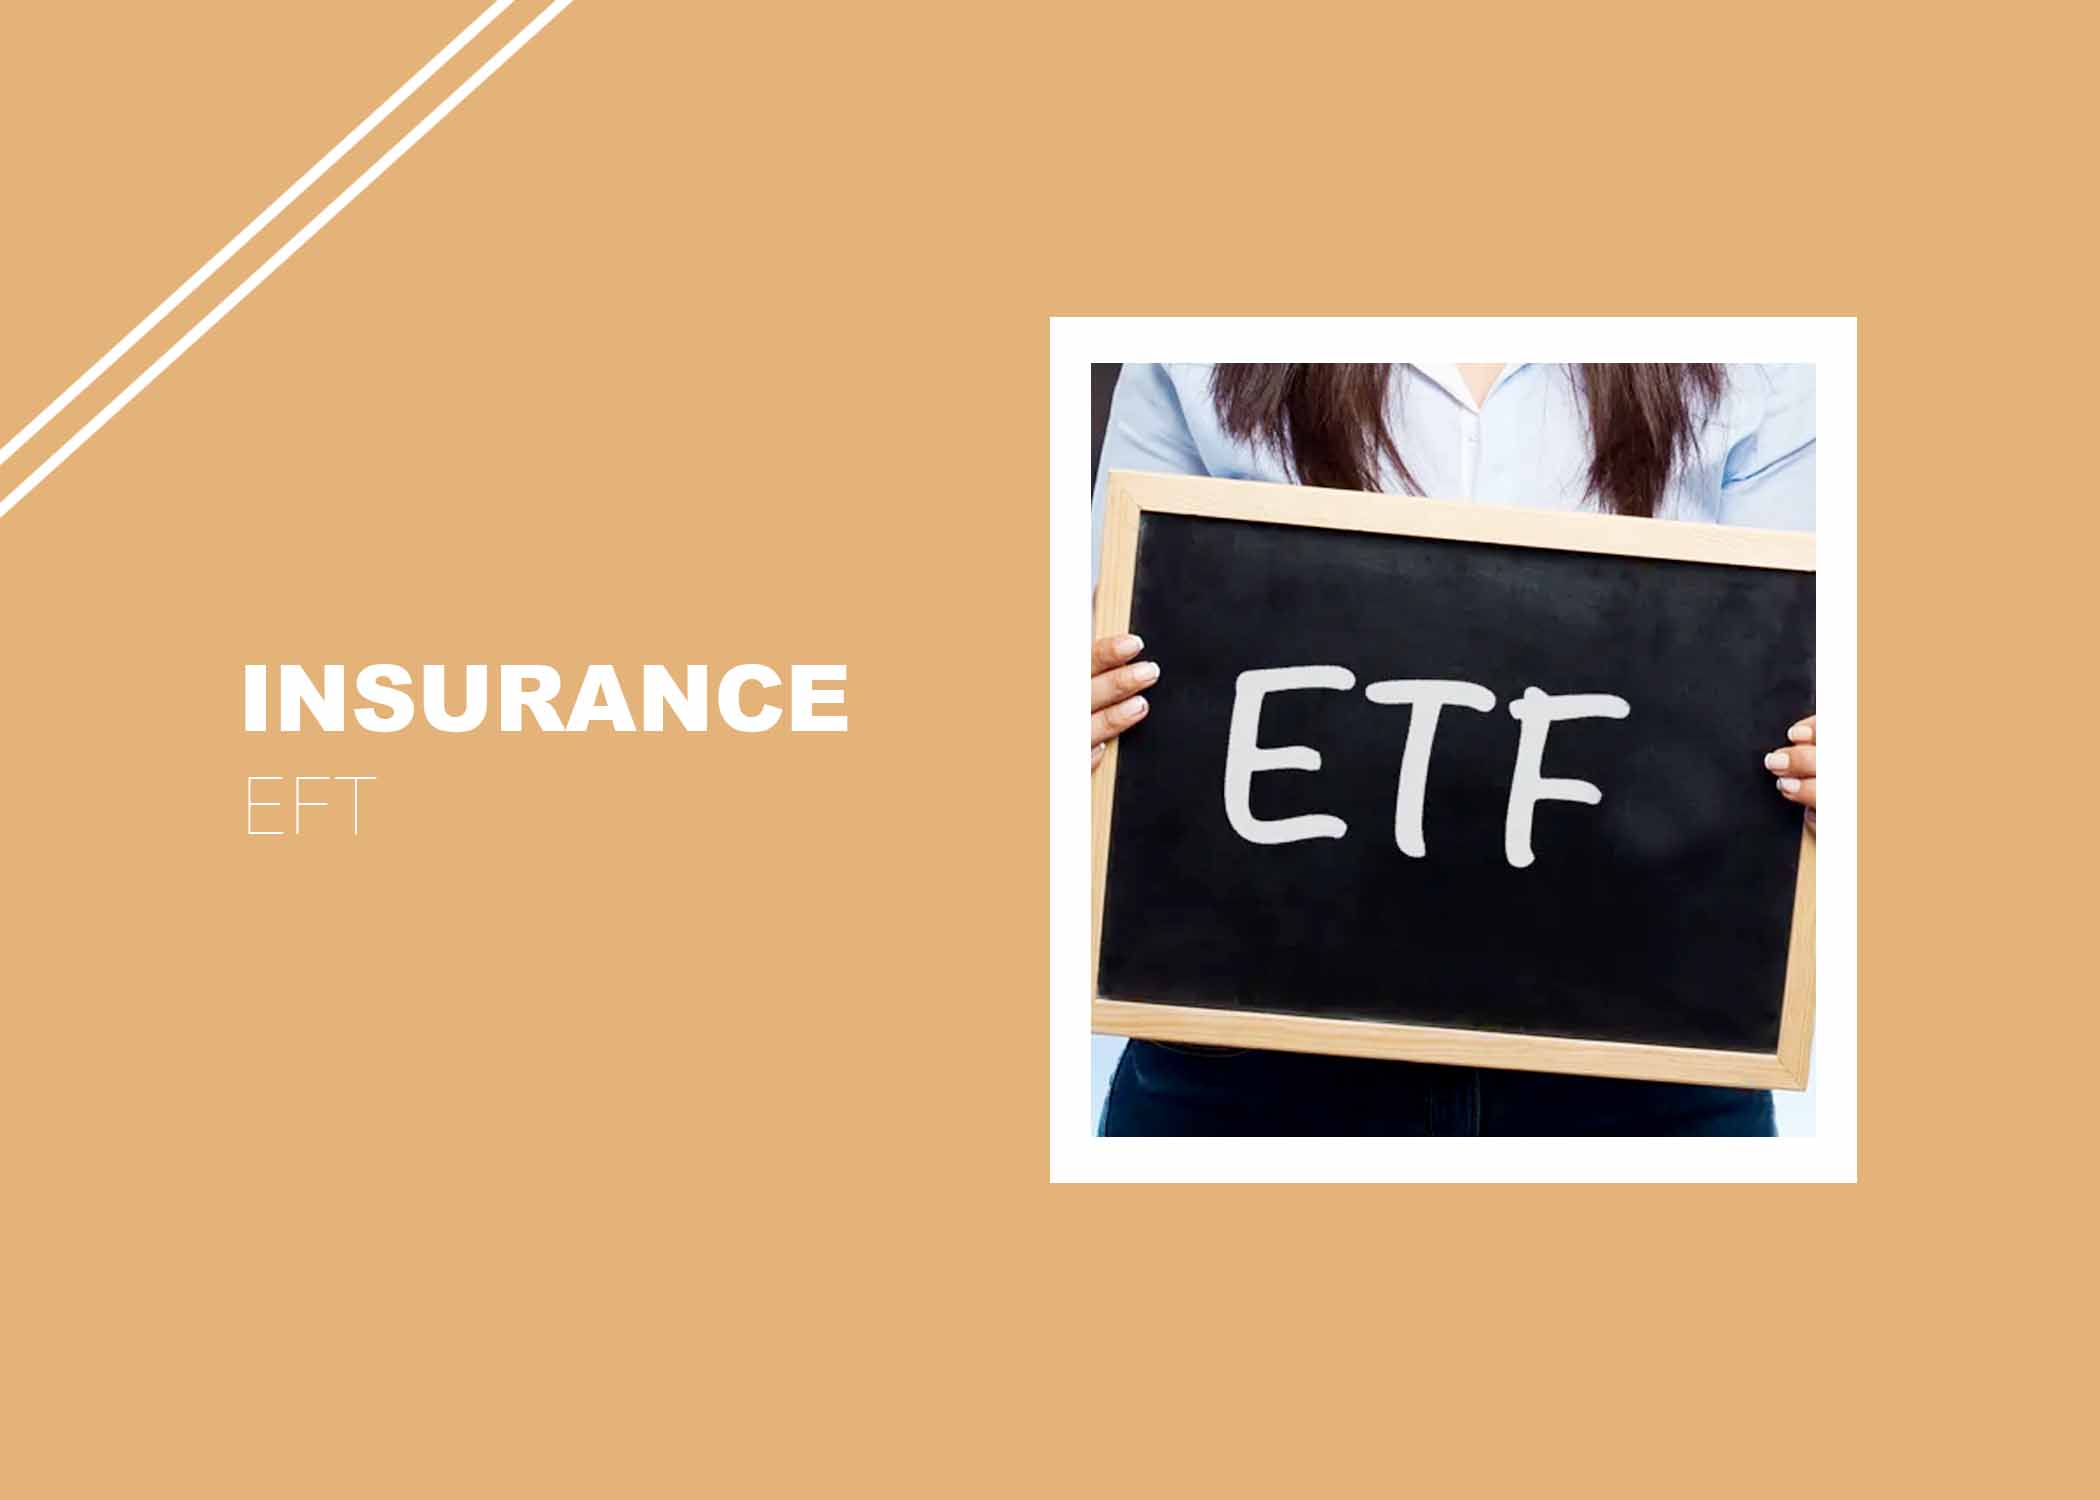 Insurance ETF